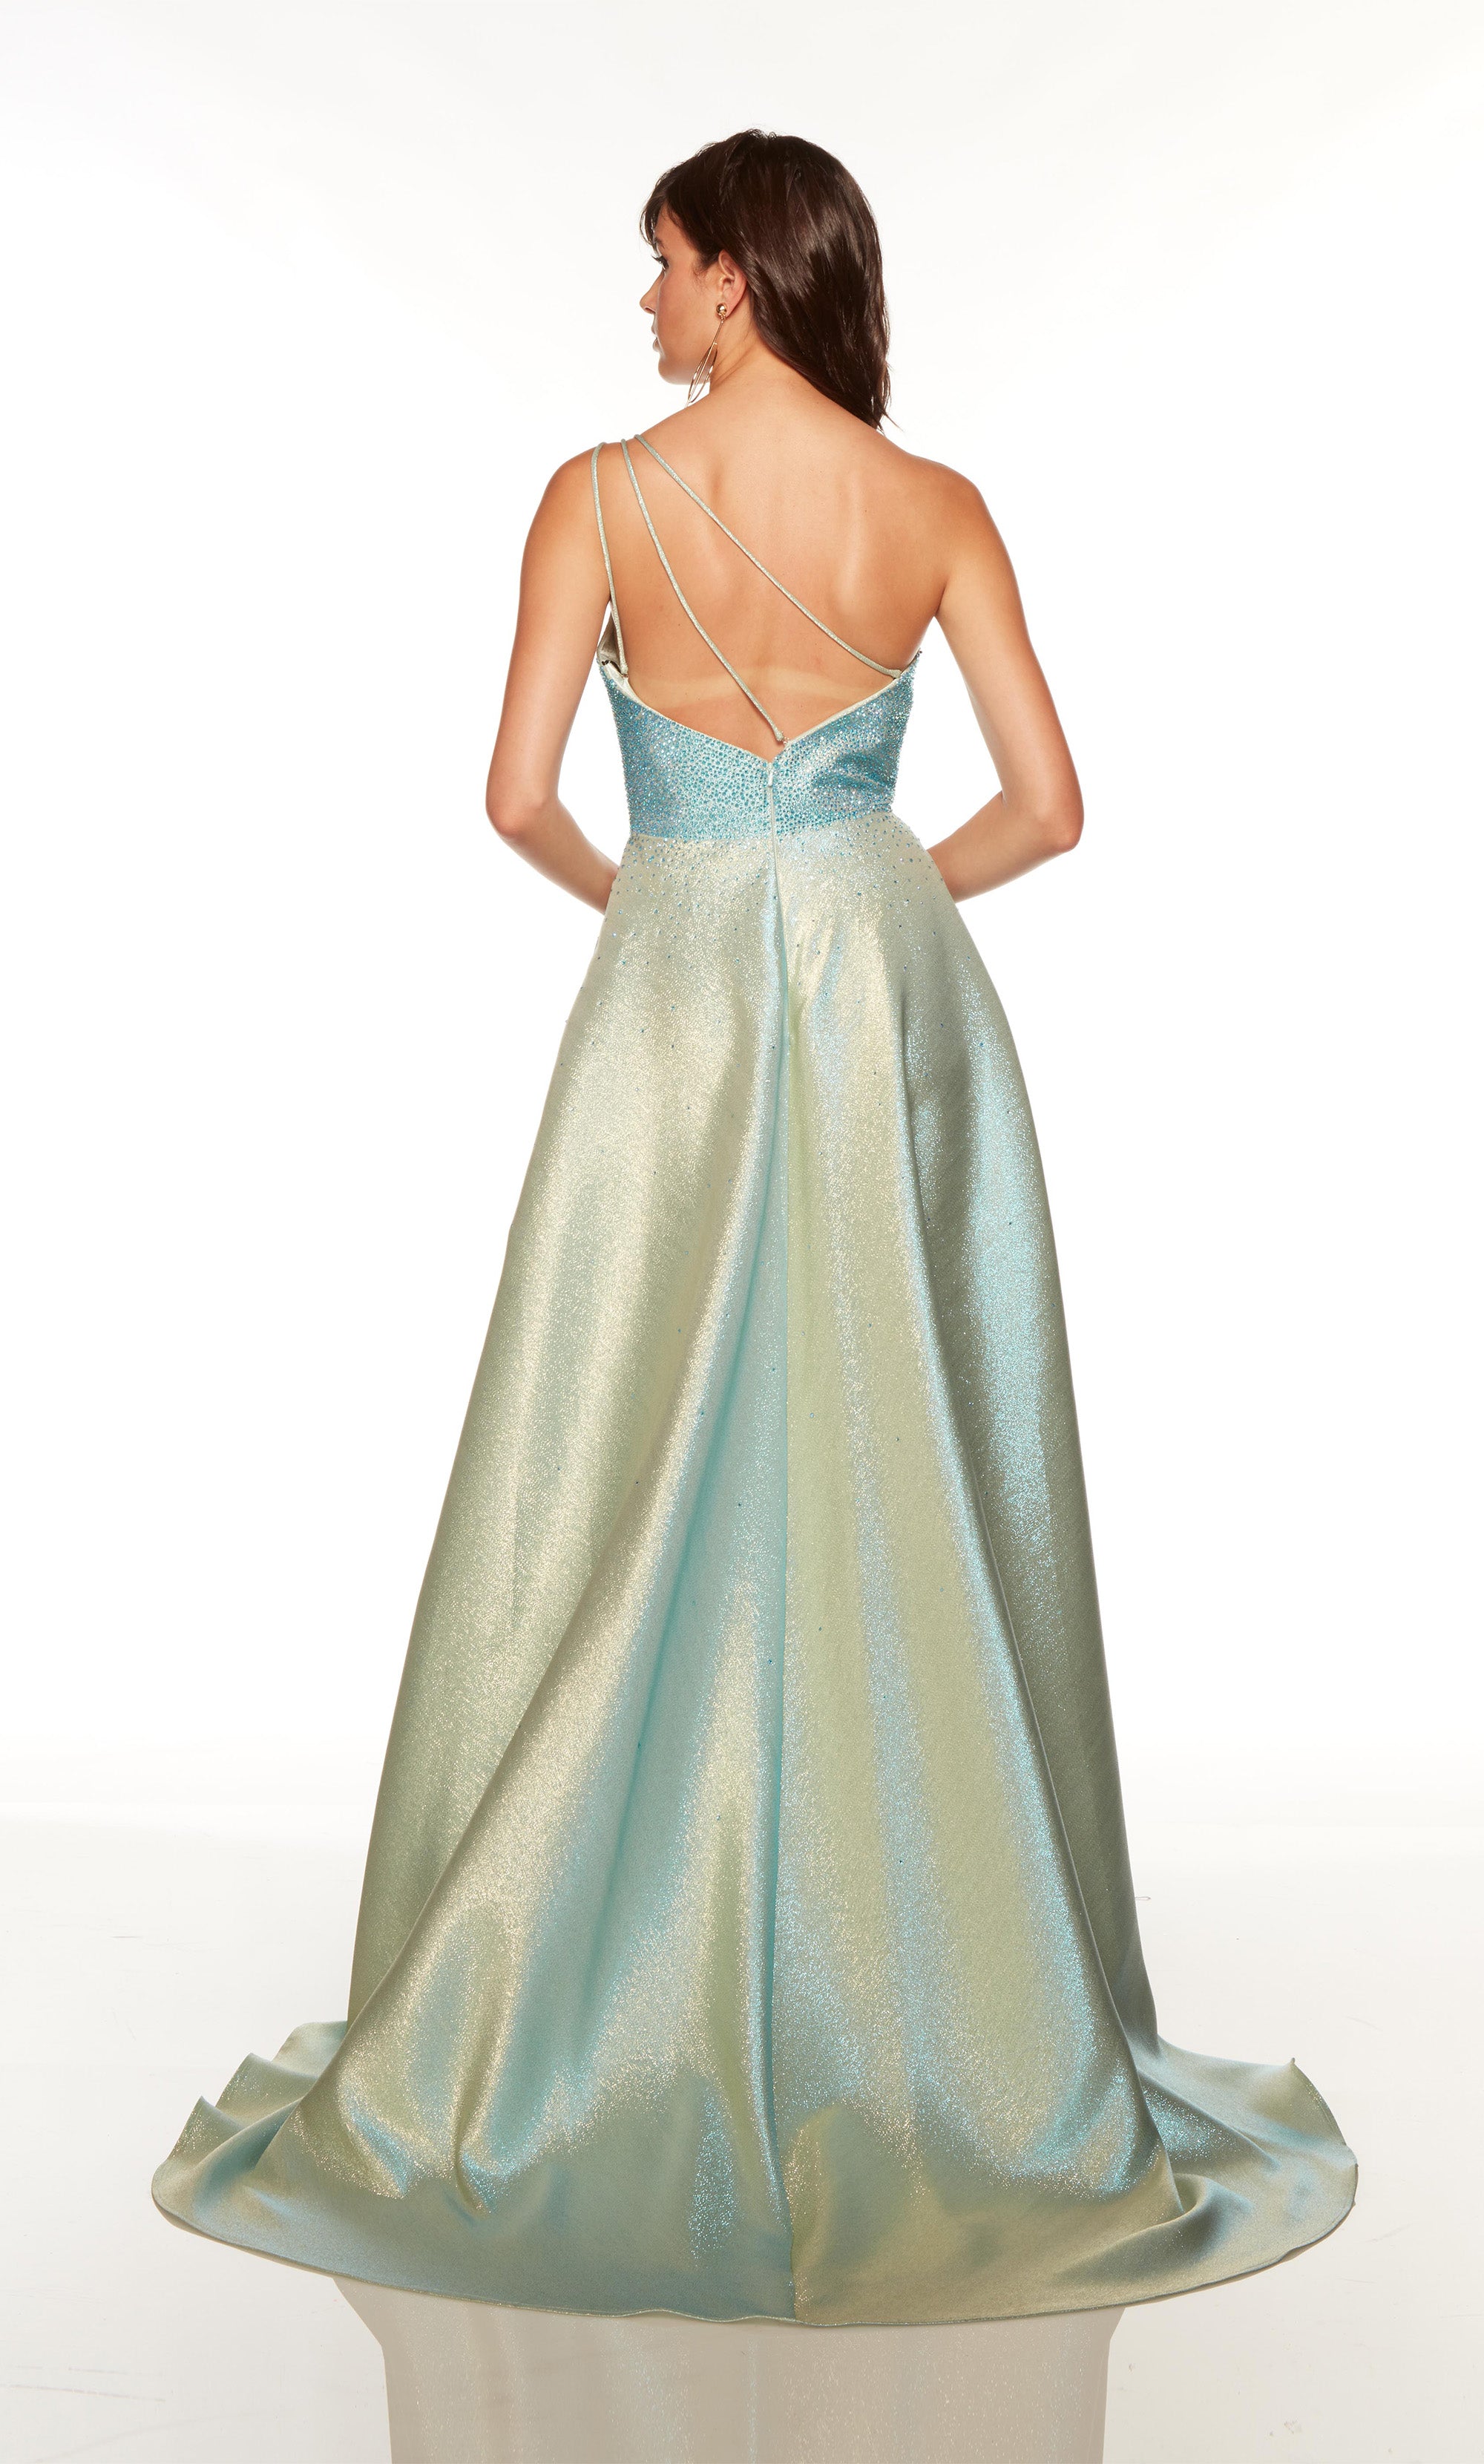  Blue-gold one shoulder prom dress with front slit. COLOR-SWATCH_1772__BLUE-GOLD